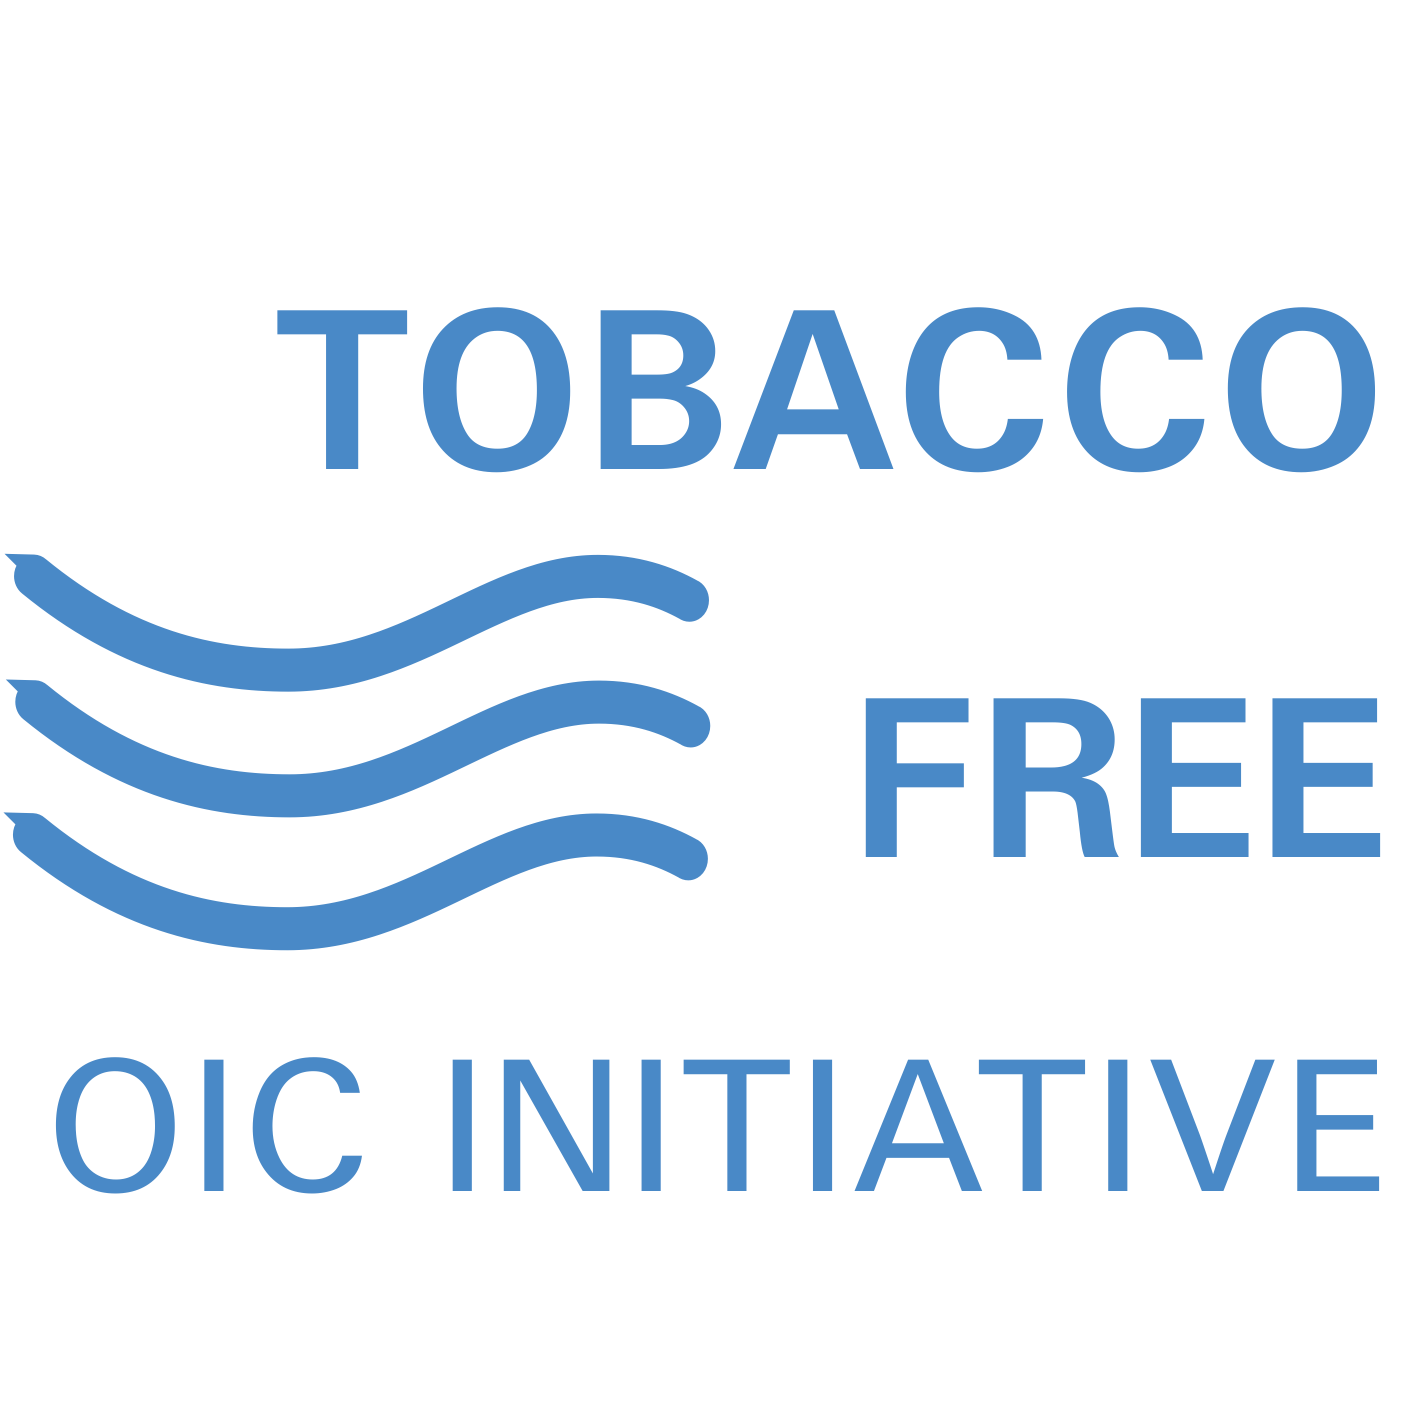 oic-tobacco-free